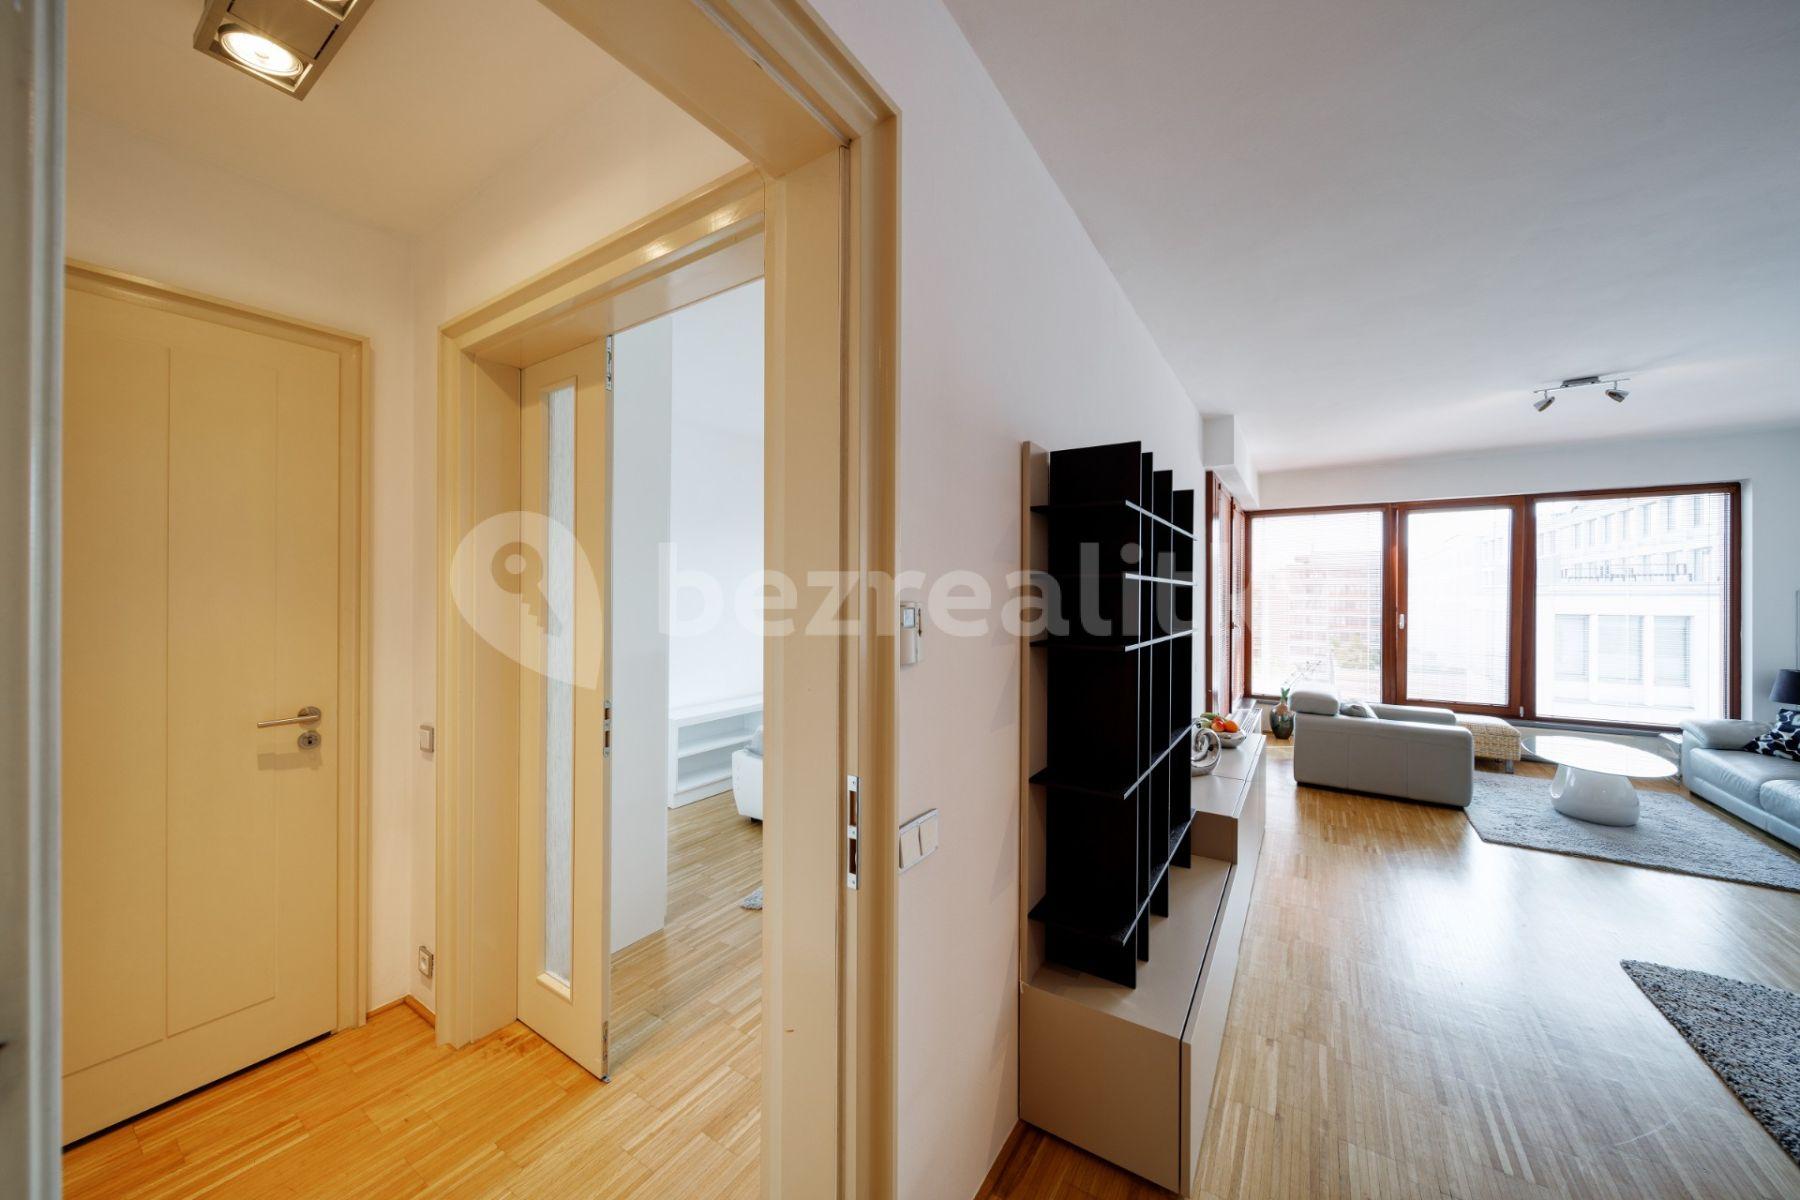 1 bedroom with open-plan kitchen flat to rent, 58 m², Rohanské nábřeží, Prague, Prague